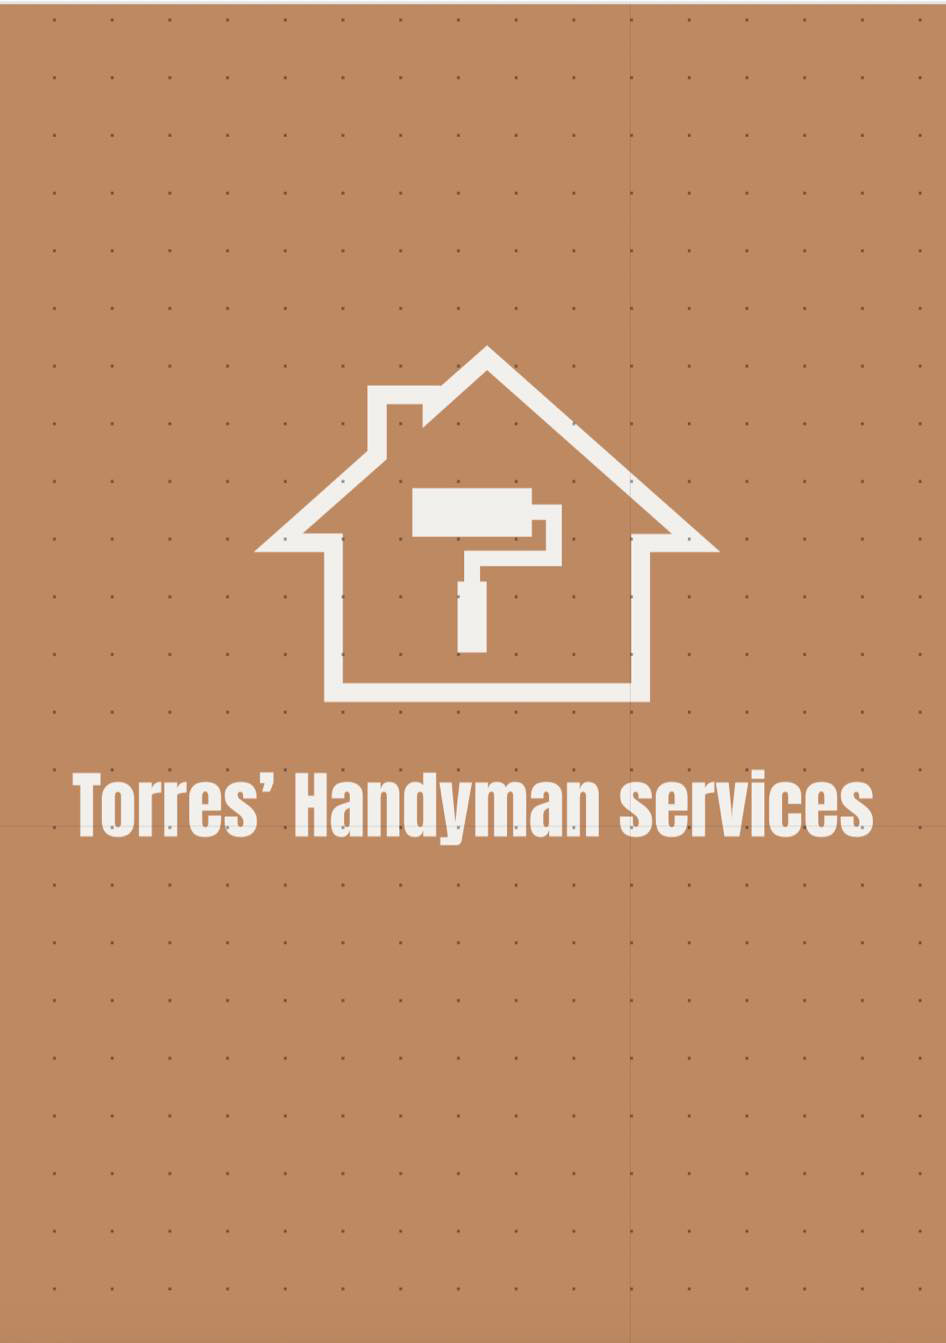 Torres' Handyman Services Logo